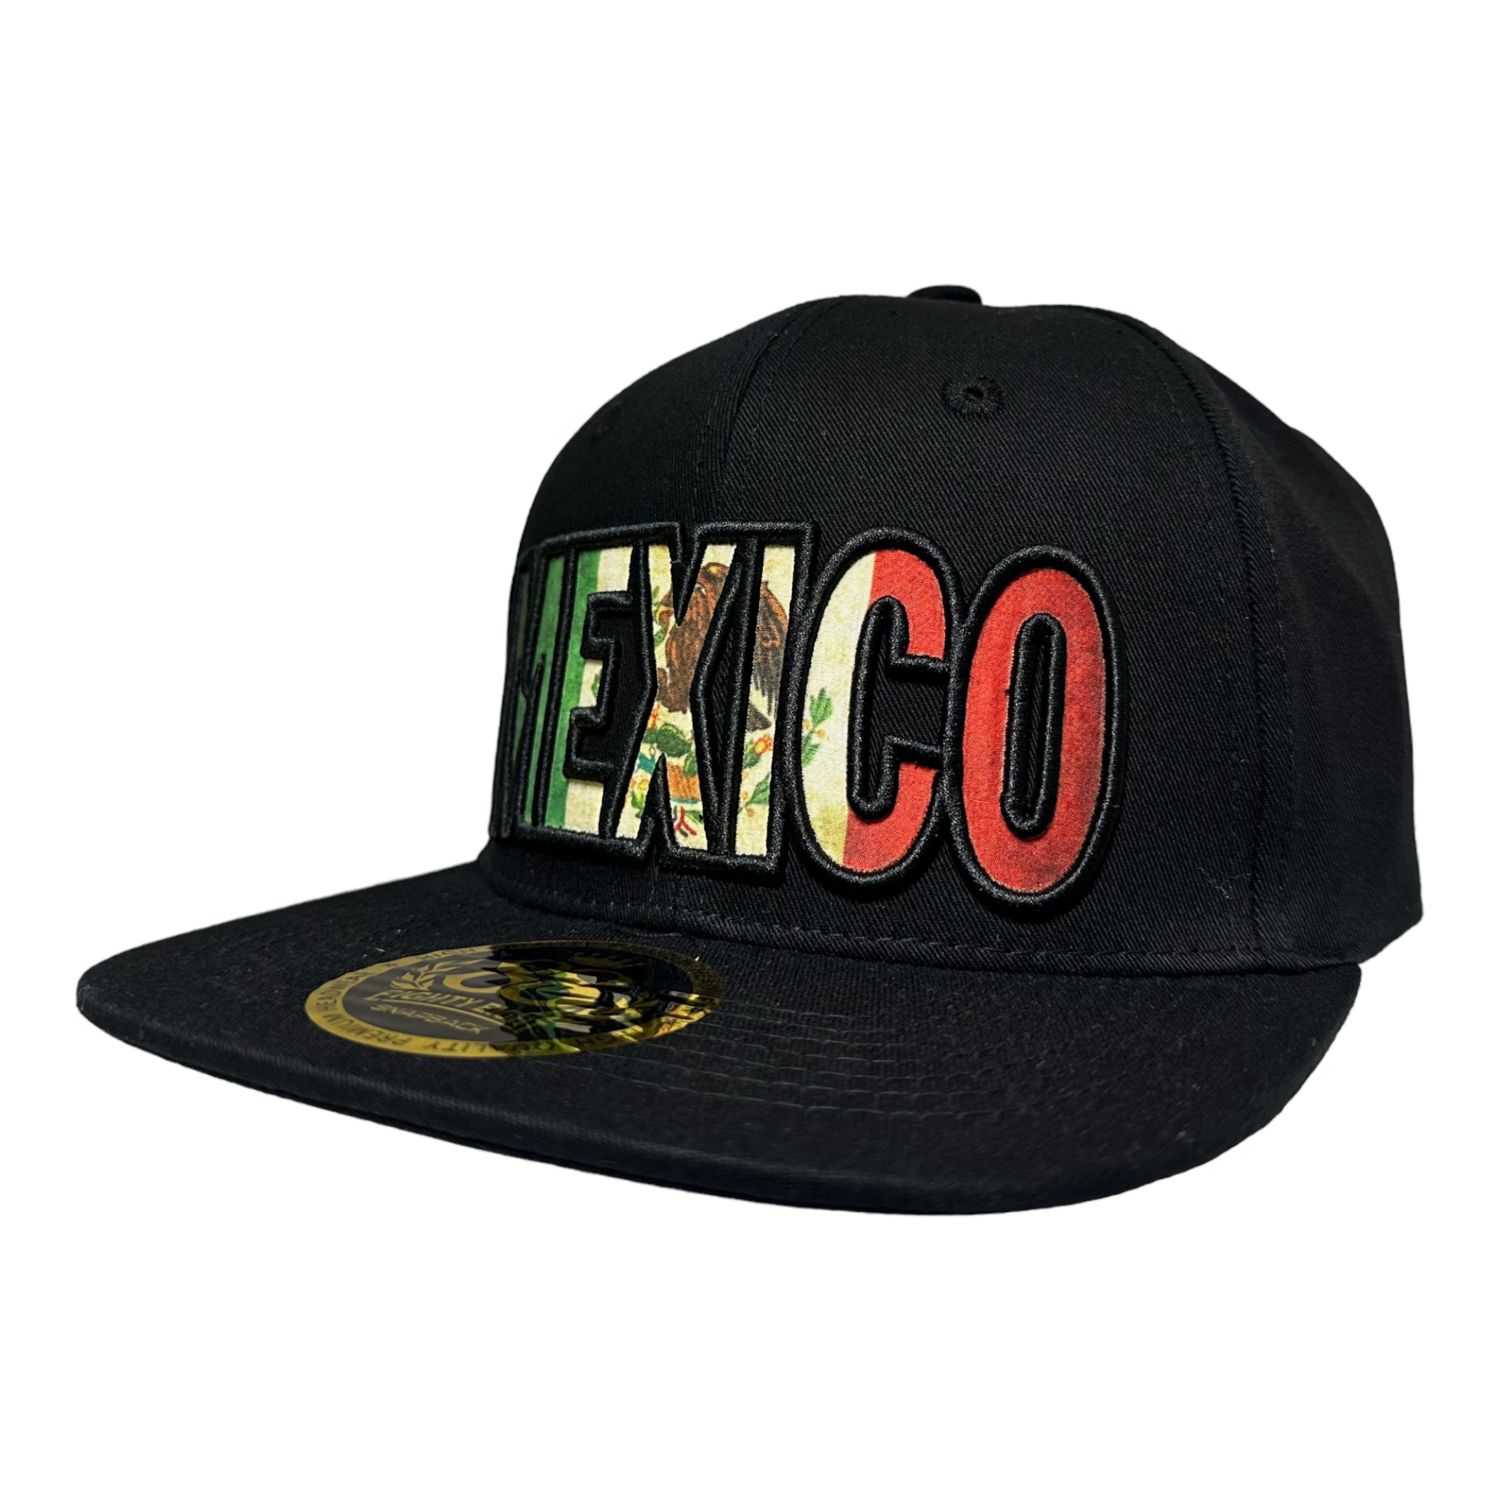 MEXICO Flag Design Lettering Snapback 6 Panel Adjustable Snap Fit Hat